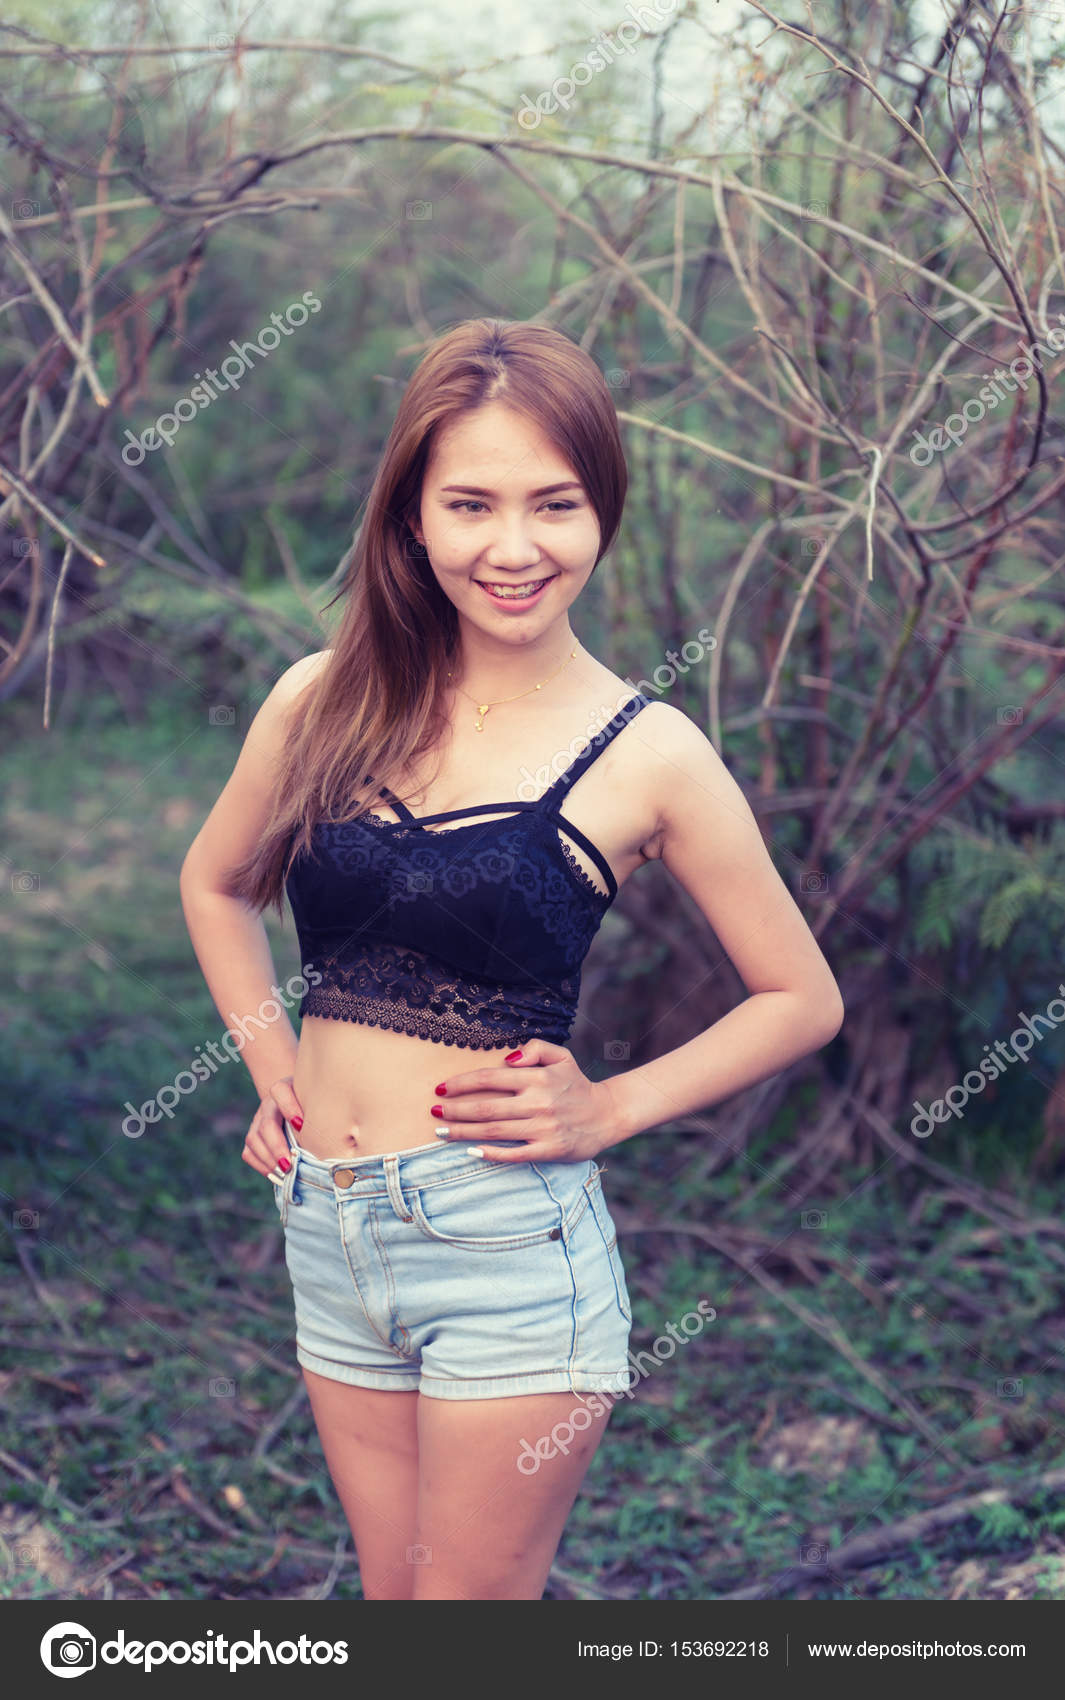 https://st3.depositphotos.com/3072055/15369/i/1600/depositphotos_153692218-stock-photo-asia-sexy-woman-summer-fashion.jpg